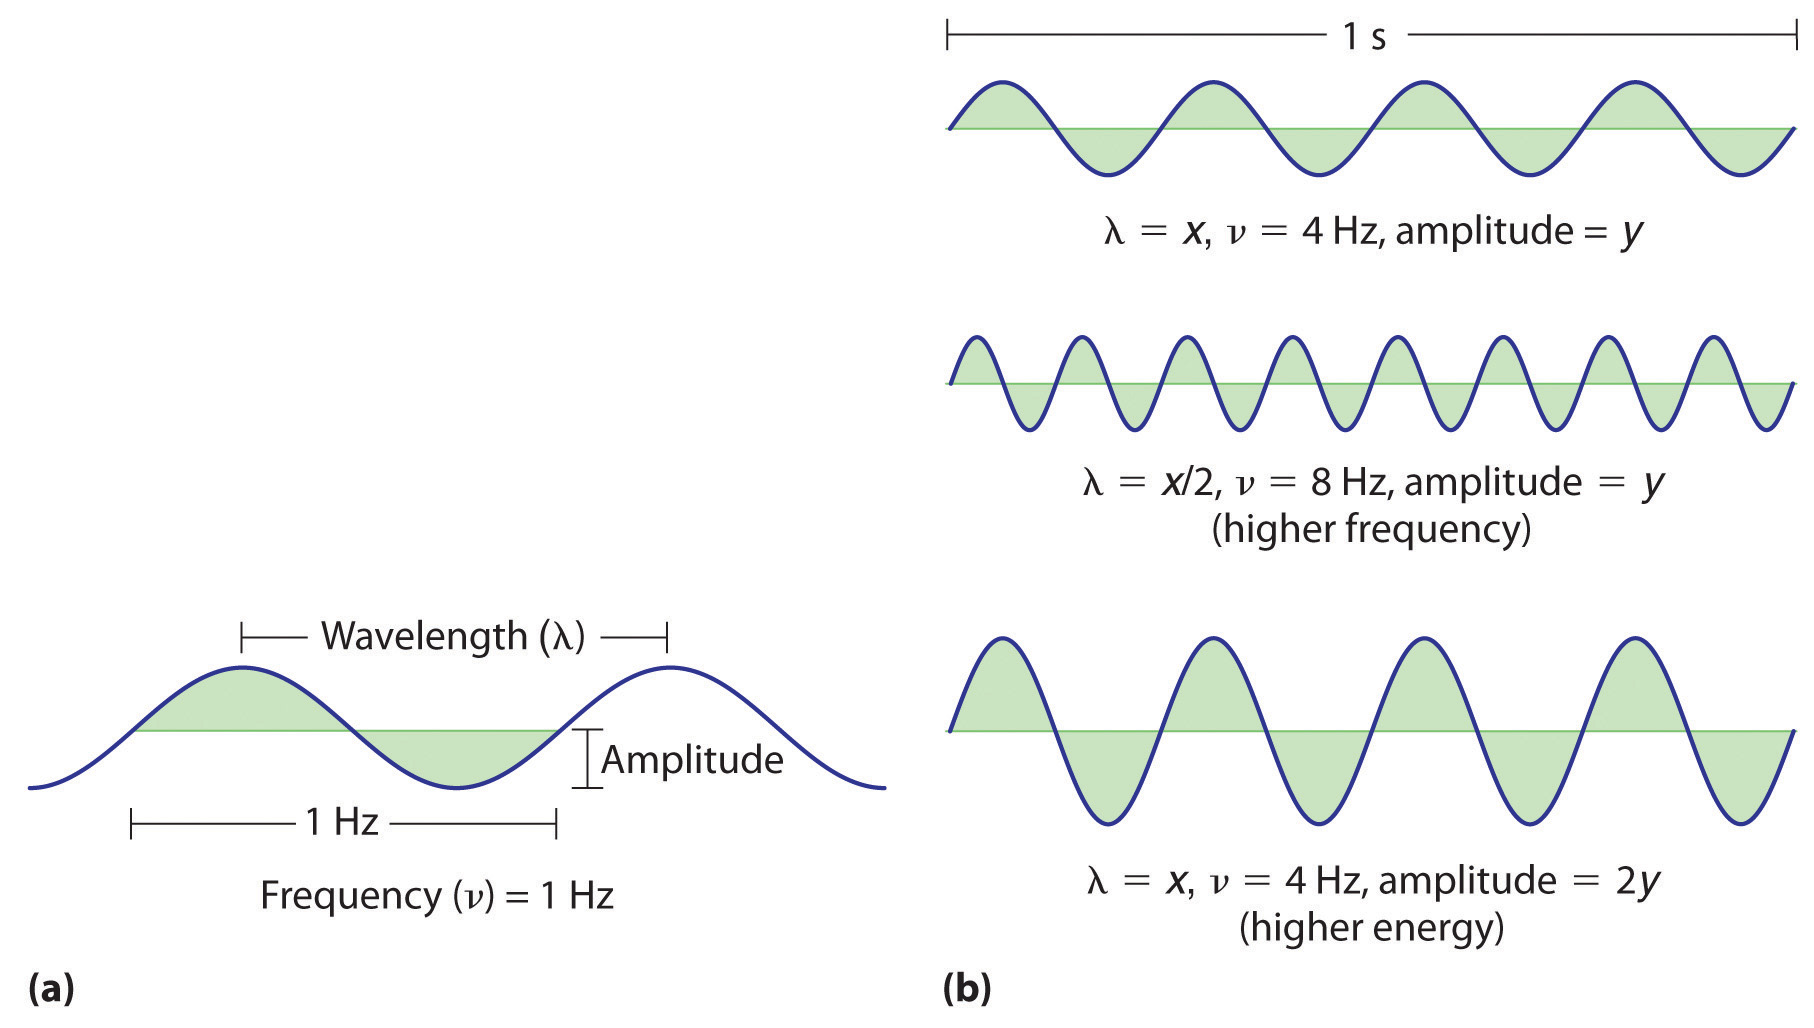 light intensity wavelength equation